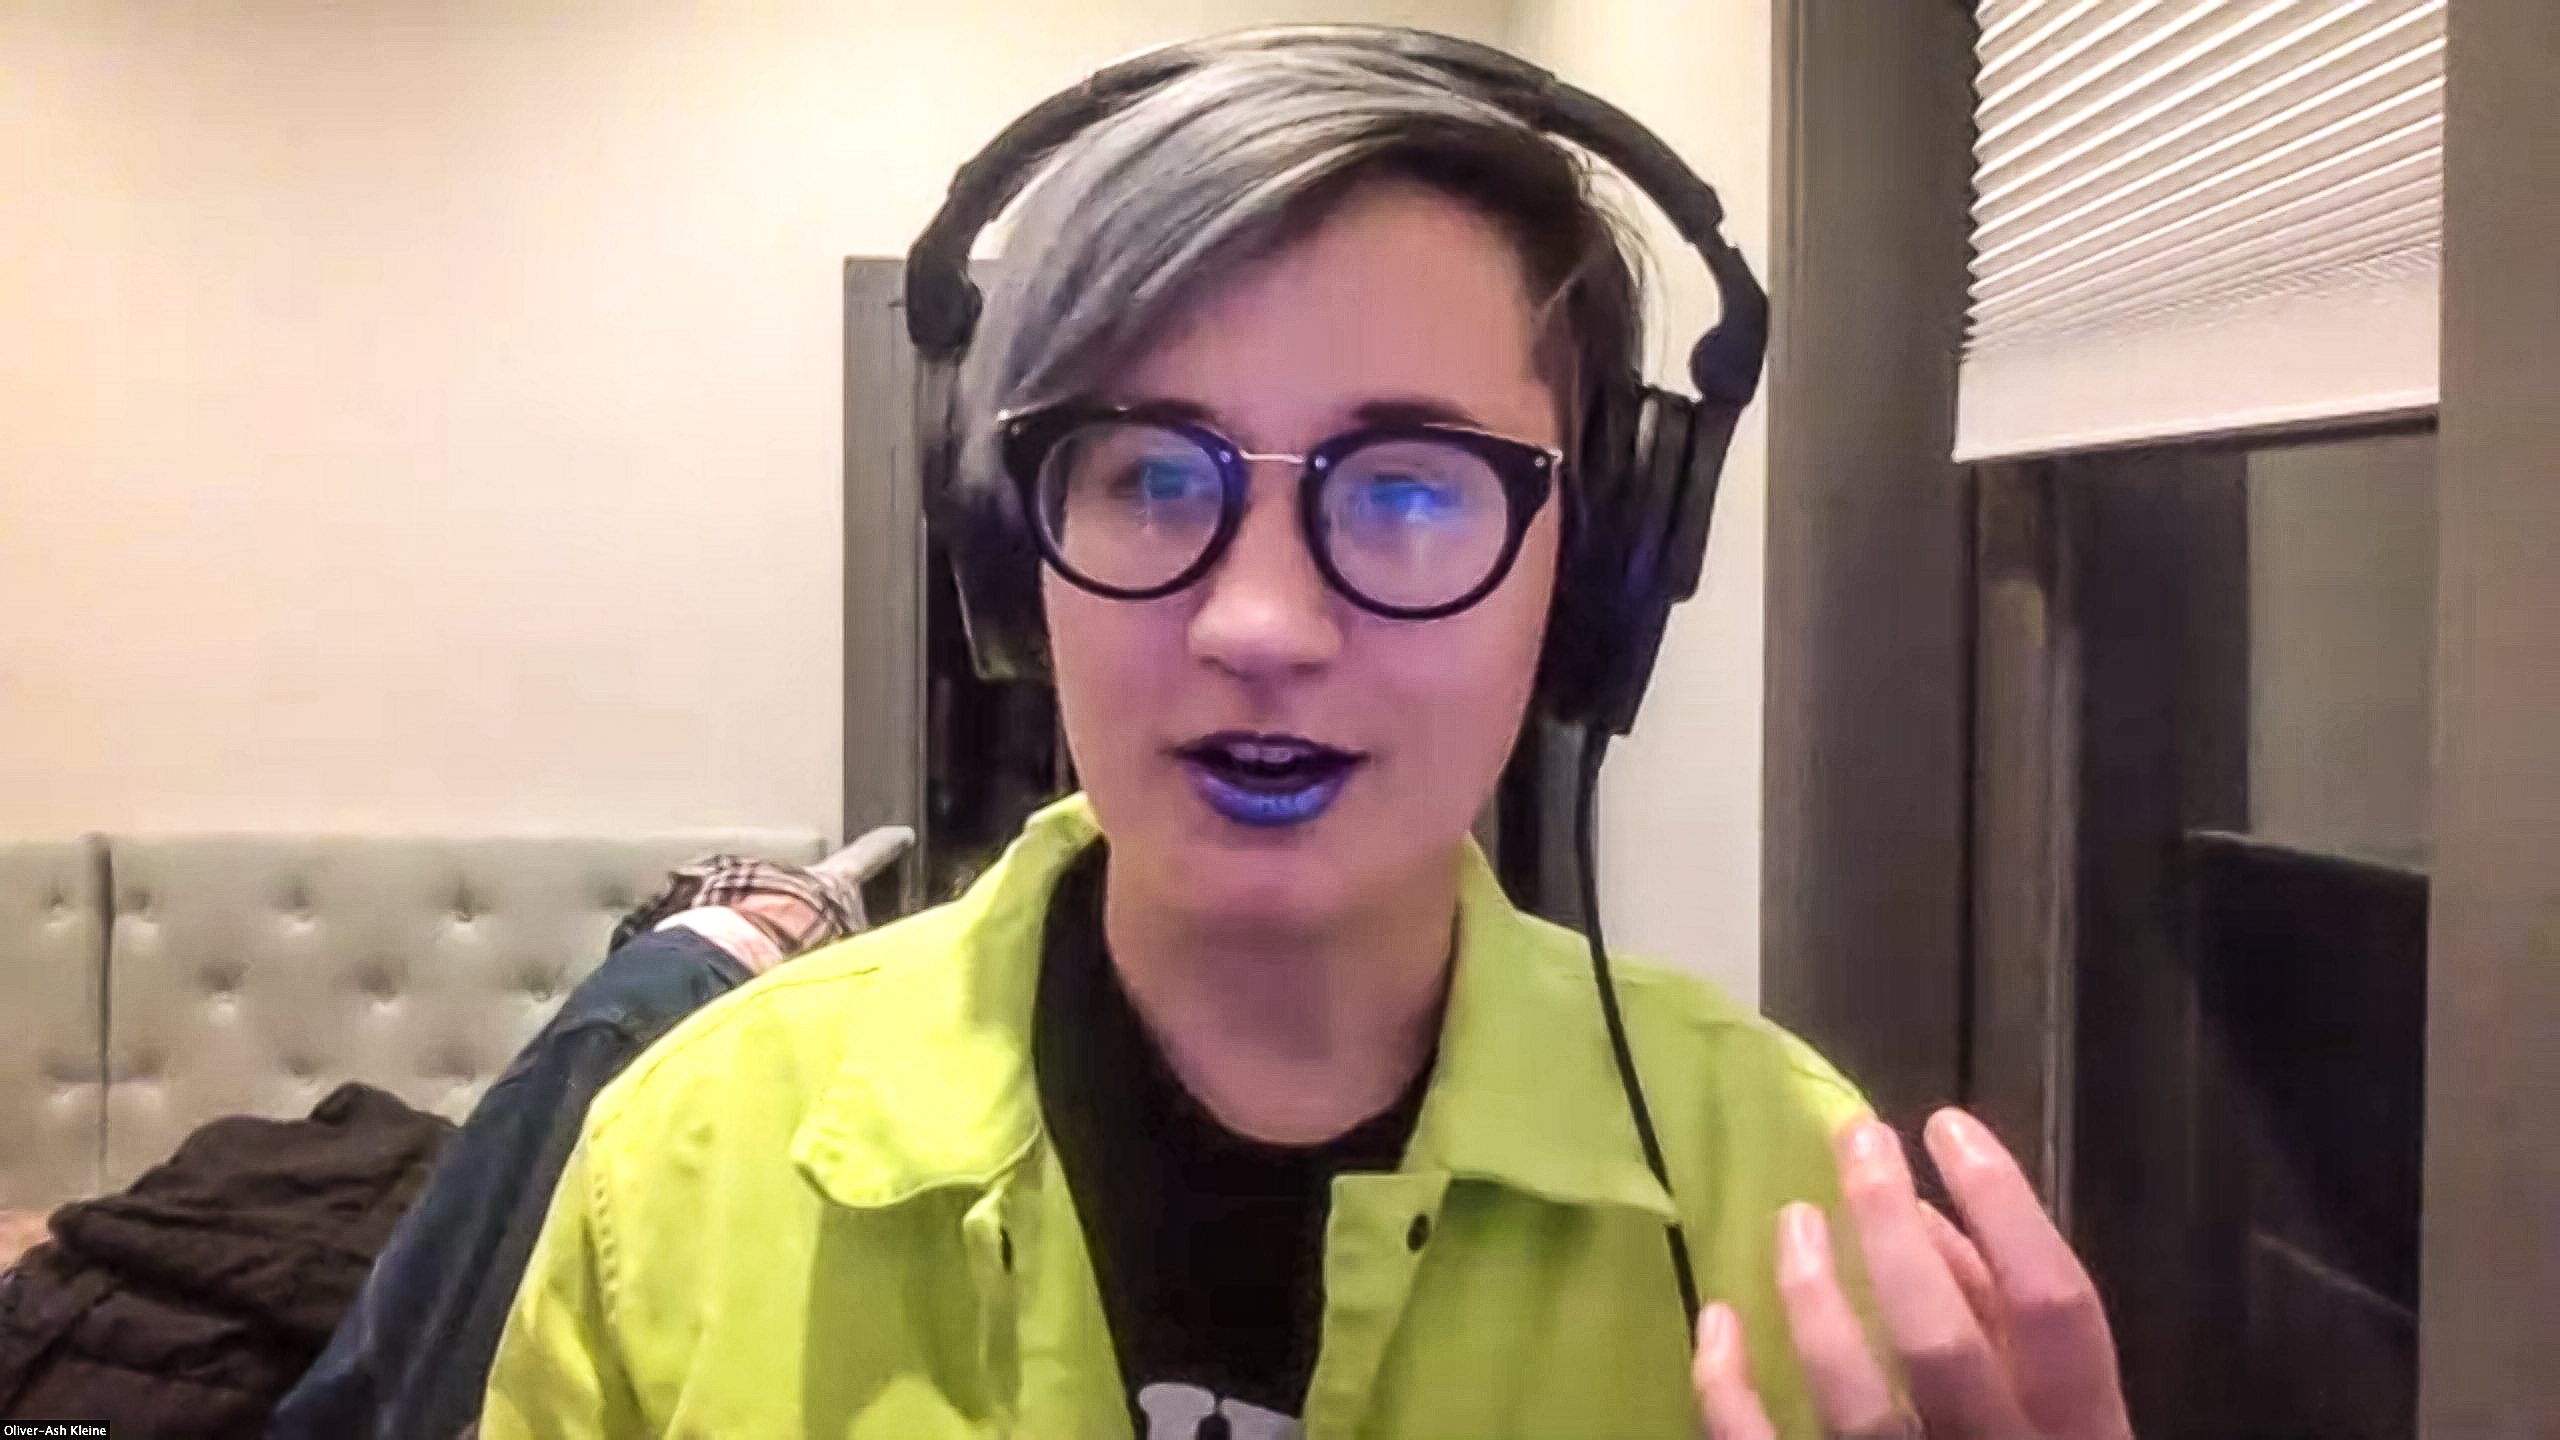 Trans person wearing headphones